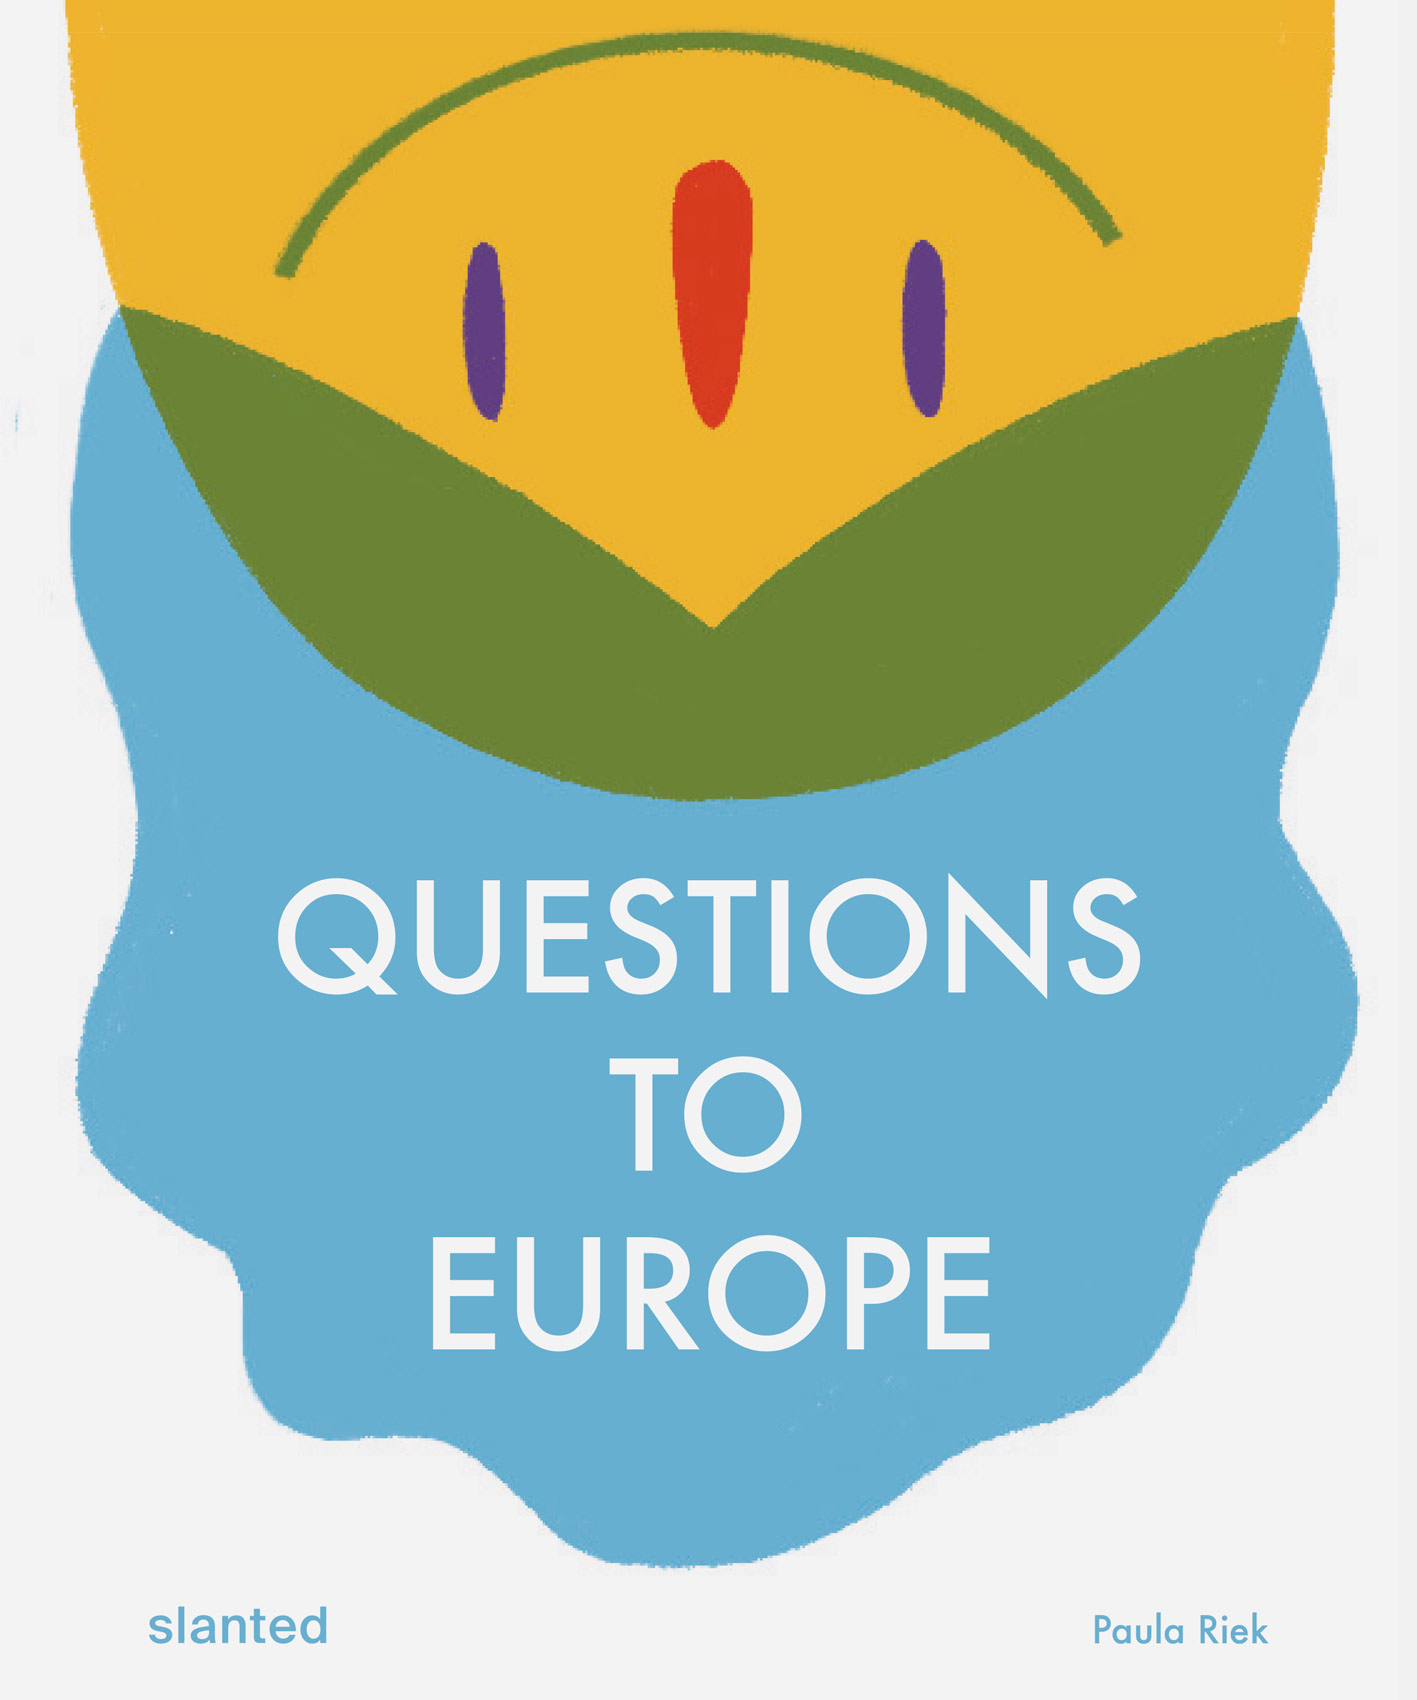 Questions to Europe / Fragen an Europa